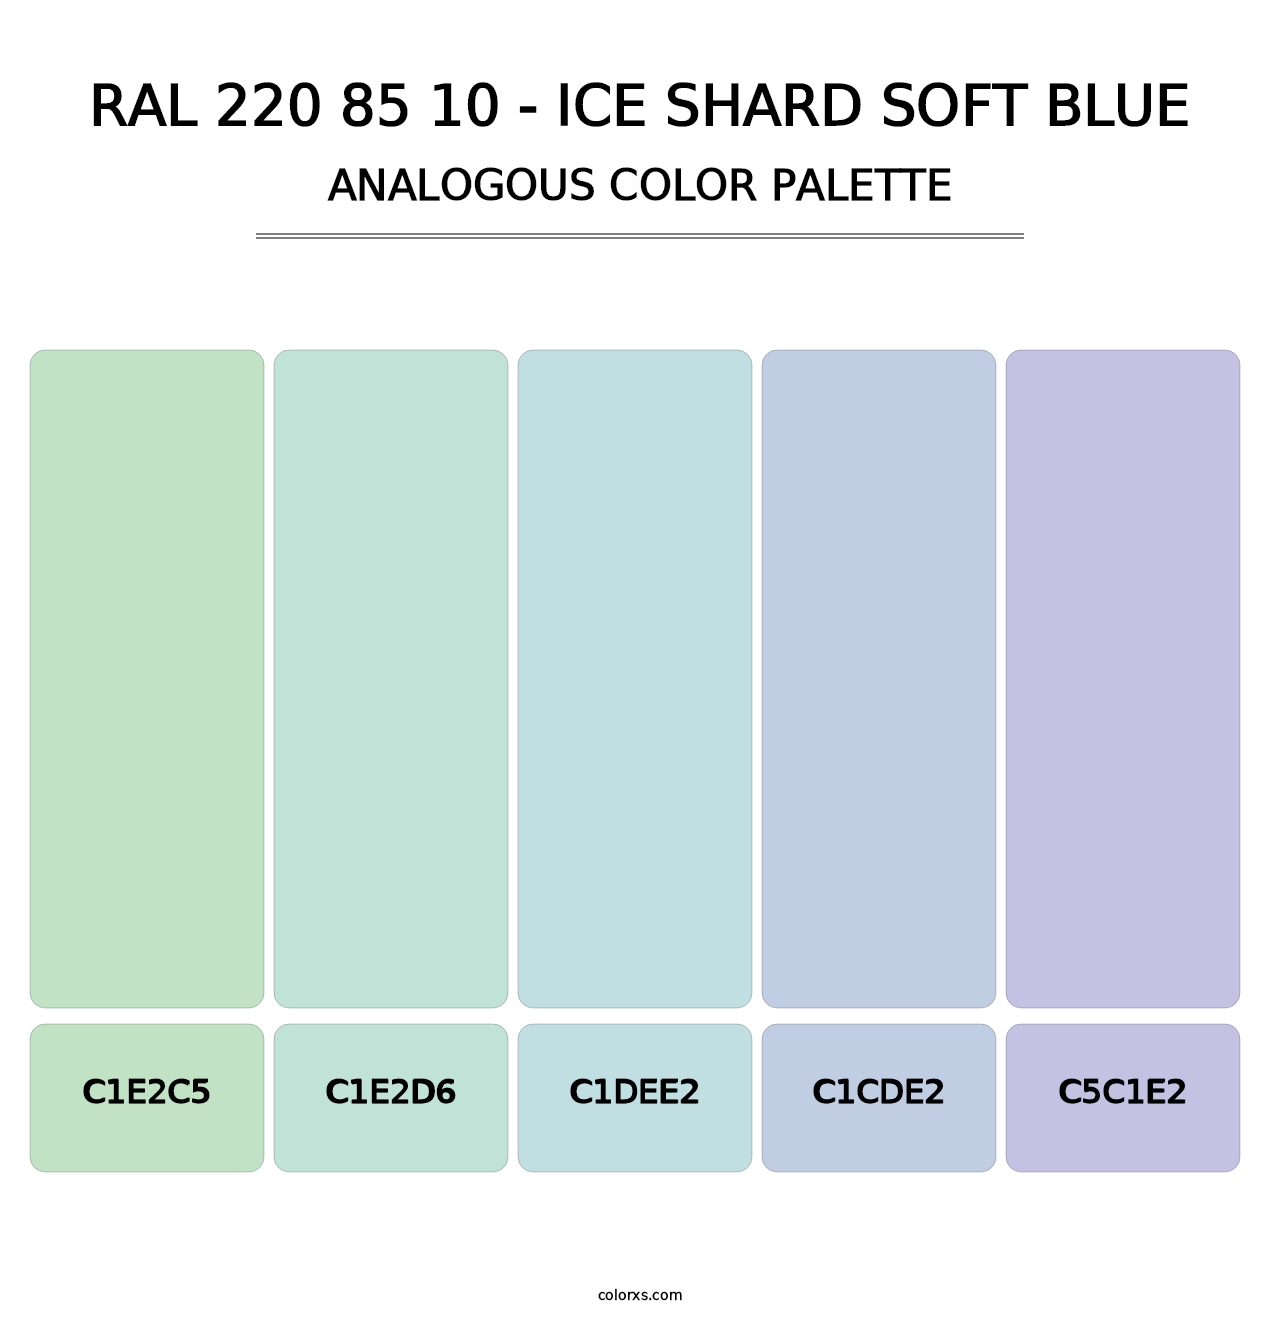 RAL 220 85 10 - Ice Shard Soft Blue - Analogous Color Palette